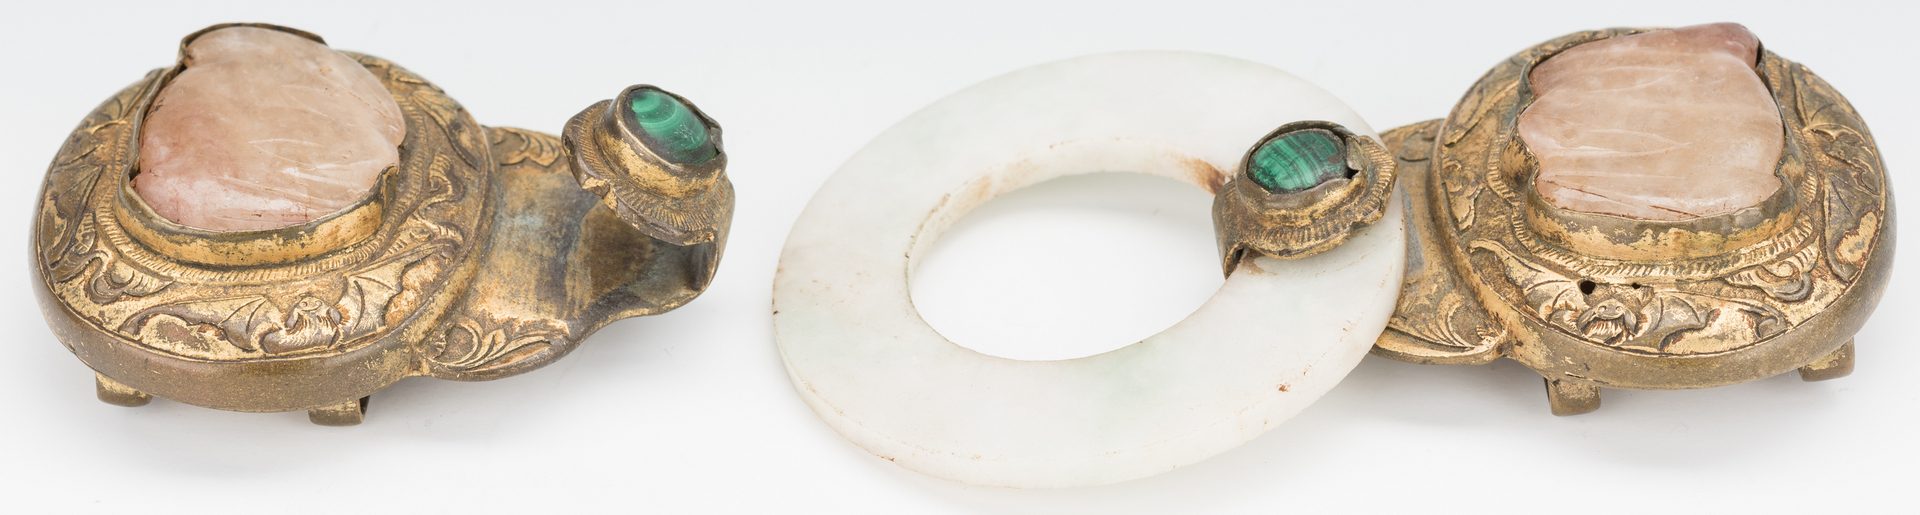 Lot 9: 2 Chinese Jade, Stone & Gilt Bronze Belt Buckles